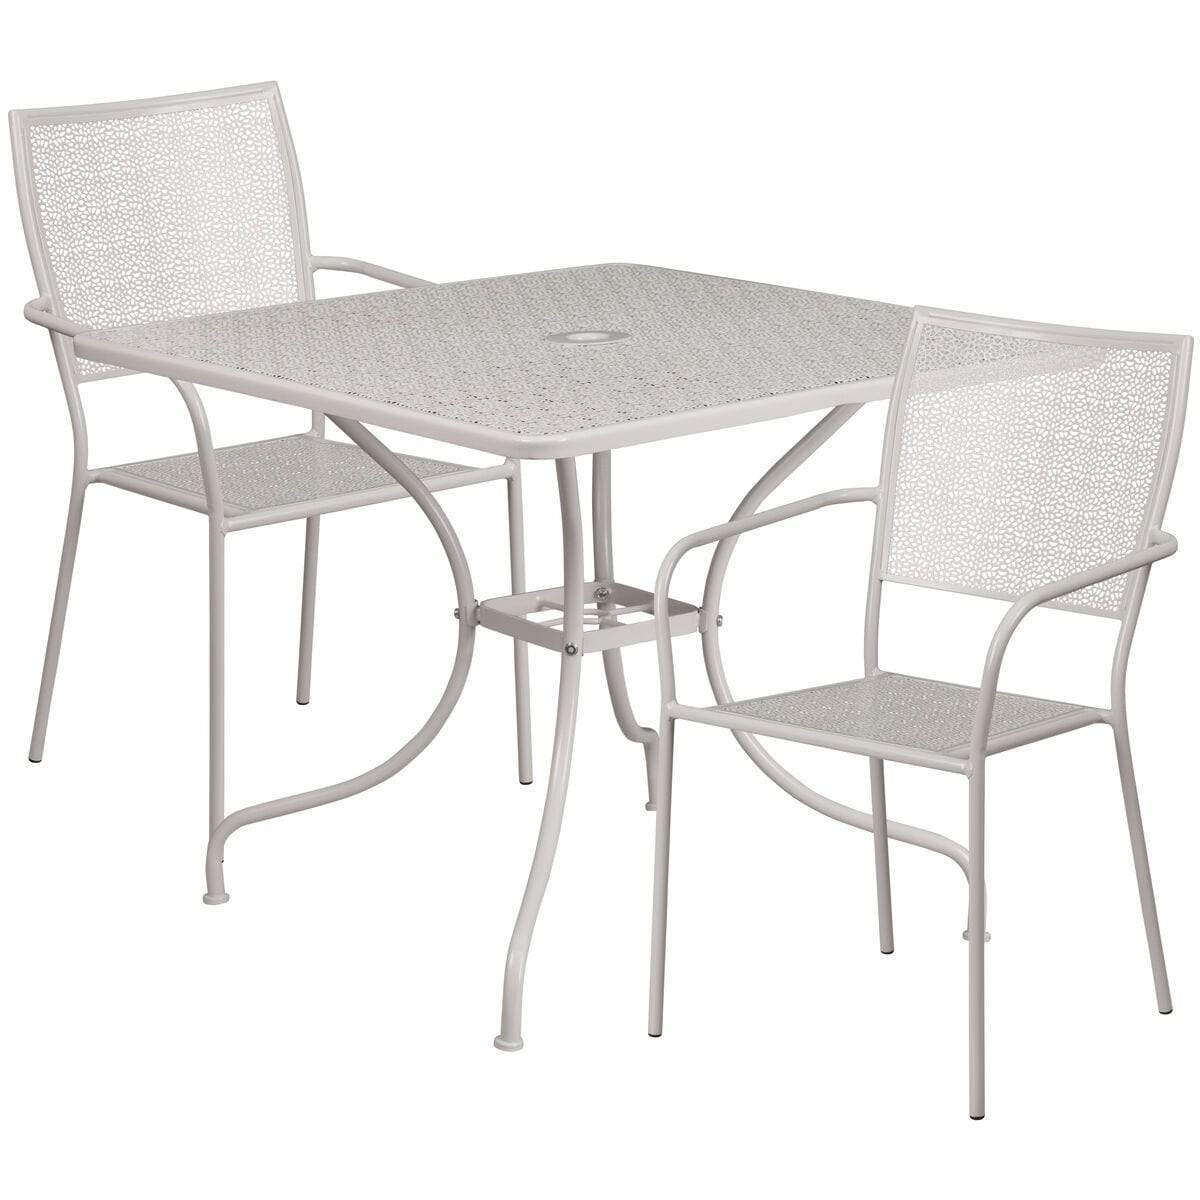 Samuel Norman & Assoc. Furnishings Metal Patio Table and Chair Sets Samuel Norman & Assoc. Furnishings 35.5SQ Gray Patio Table Set